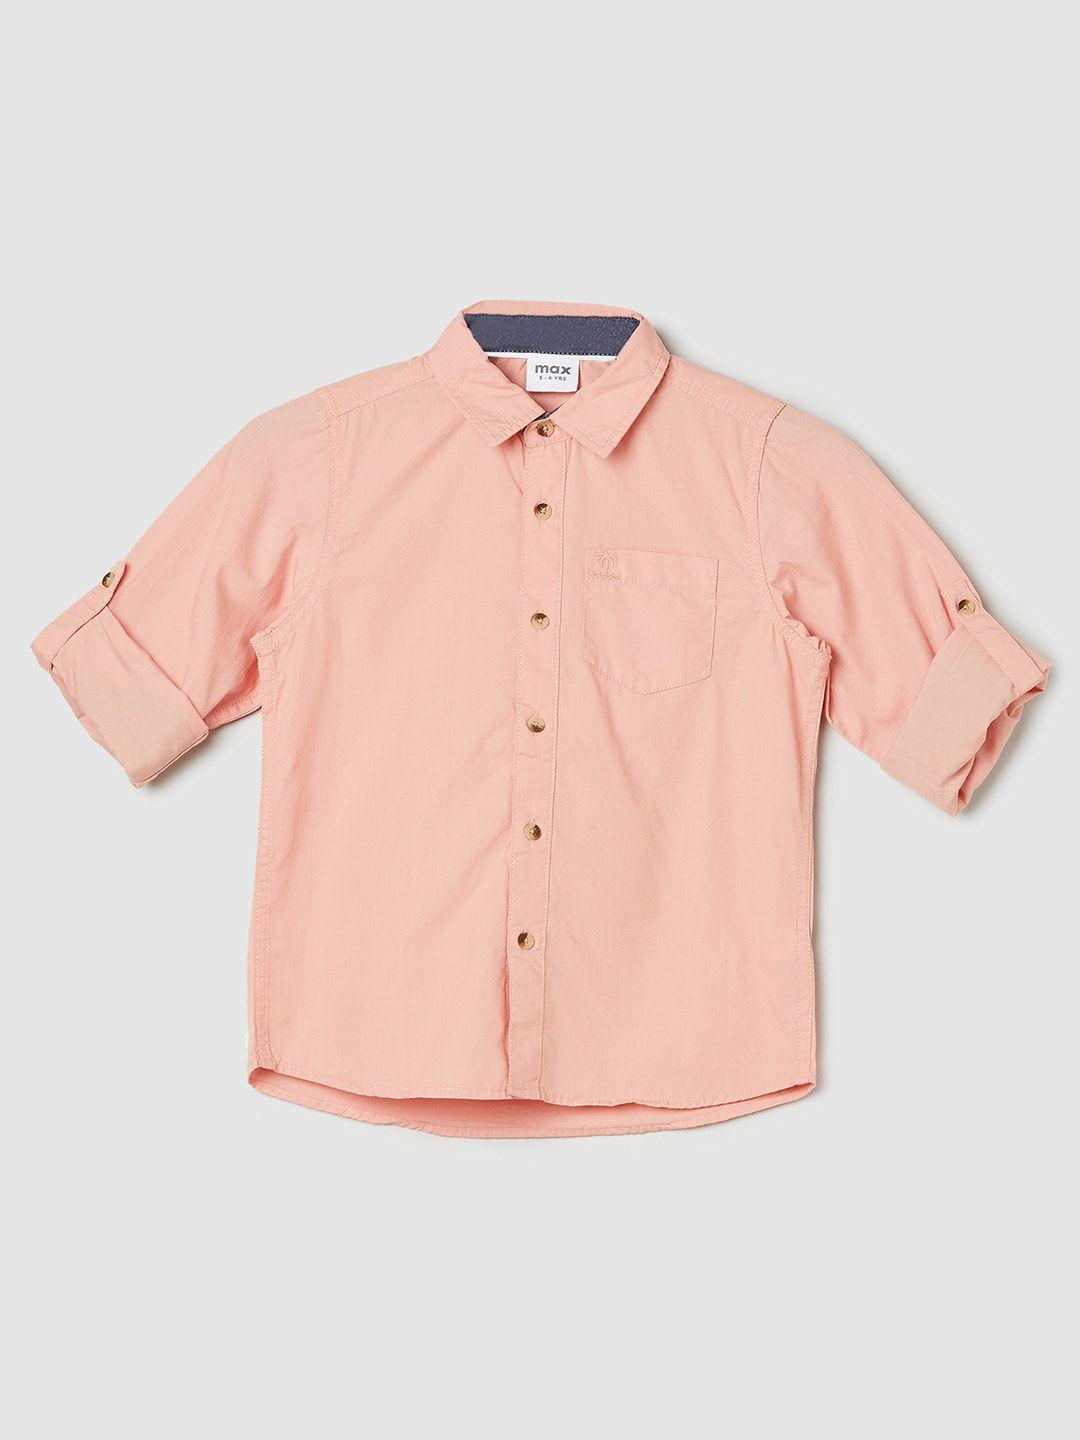 max boys orange opaque casual shirt